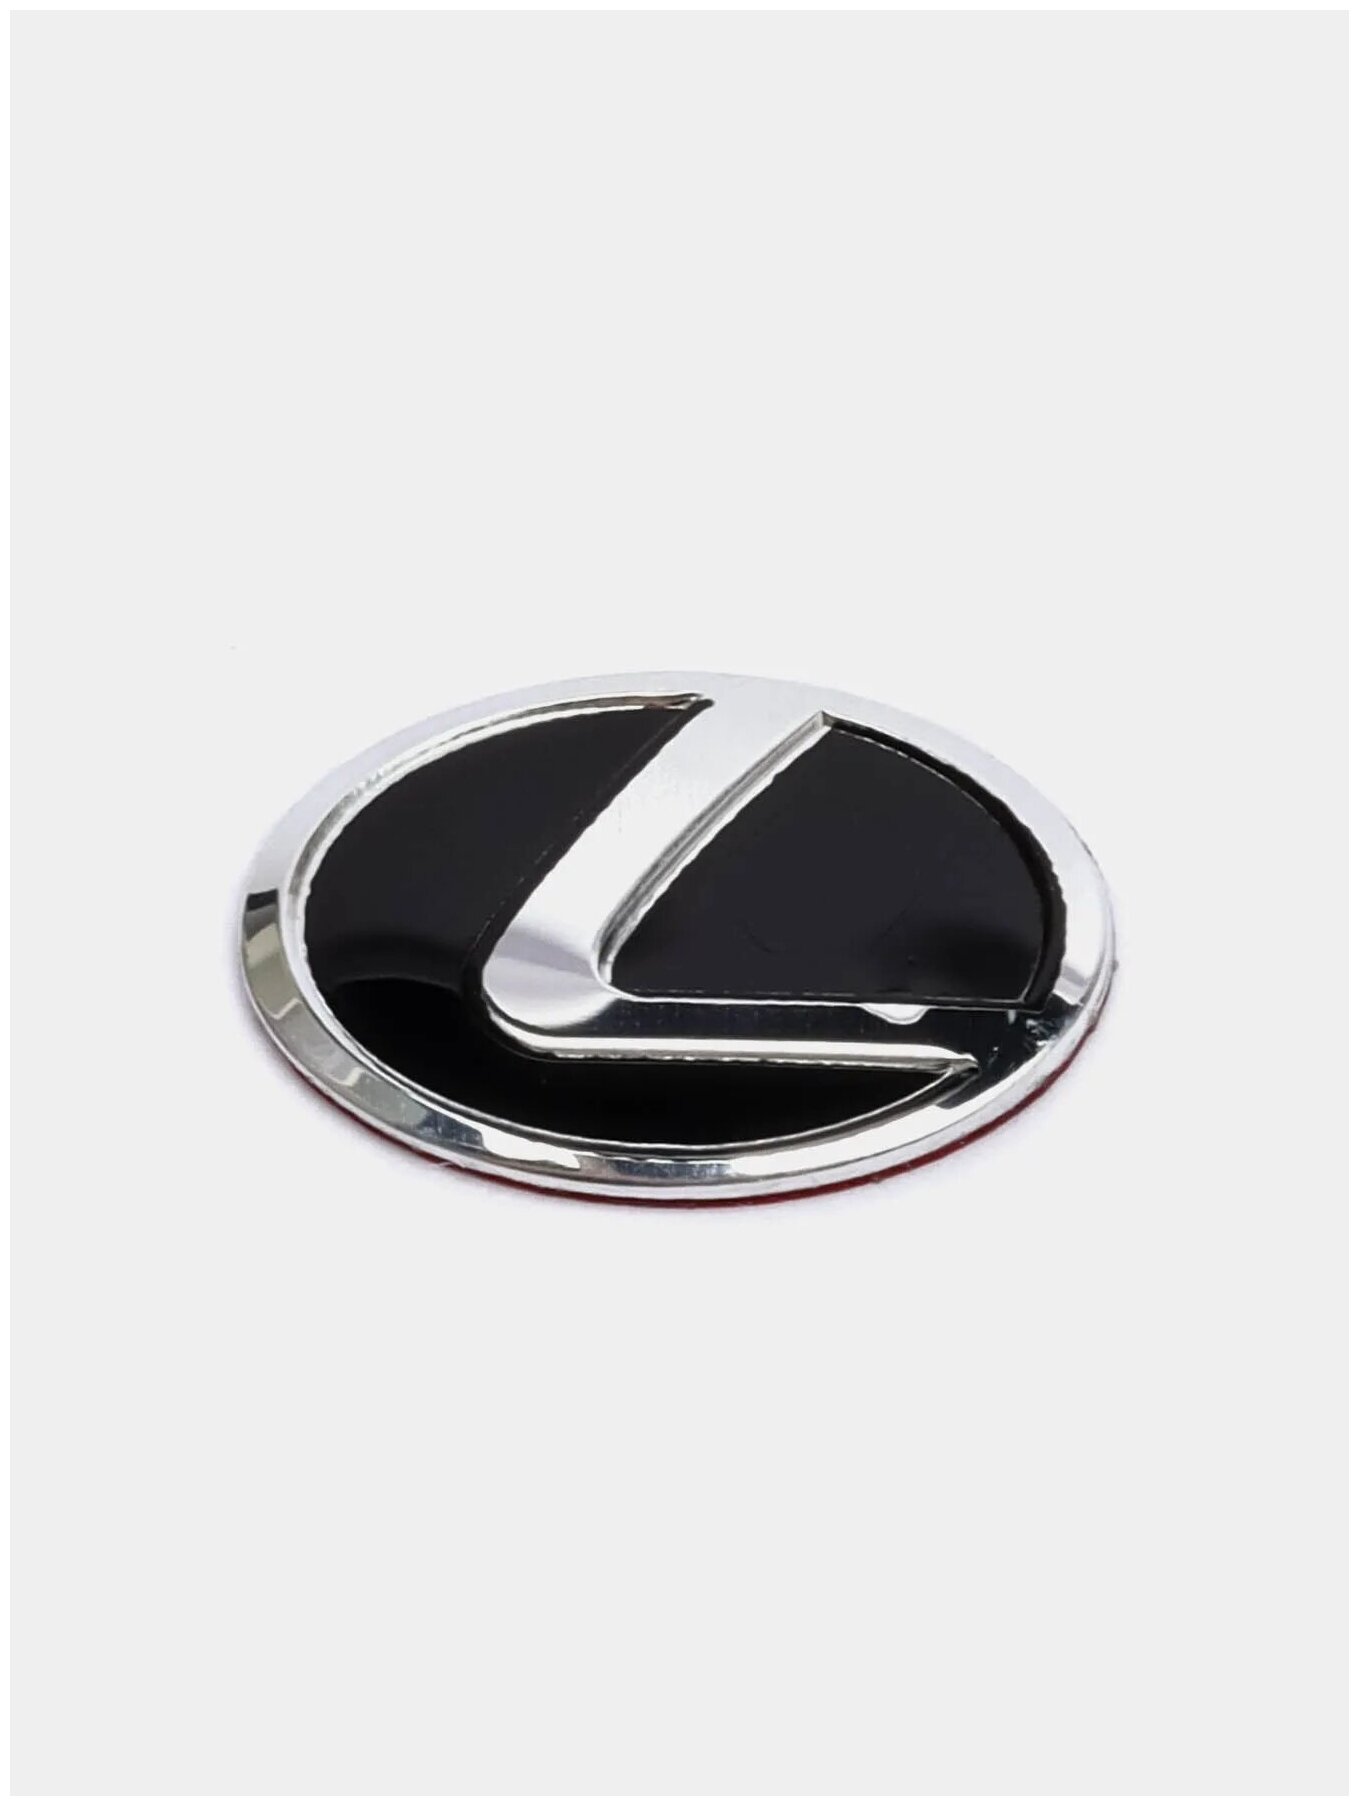 Эмблема Lexus на ключ зажигания 15 * 10 мм